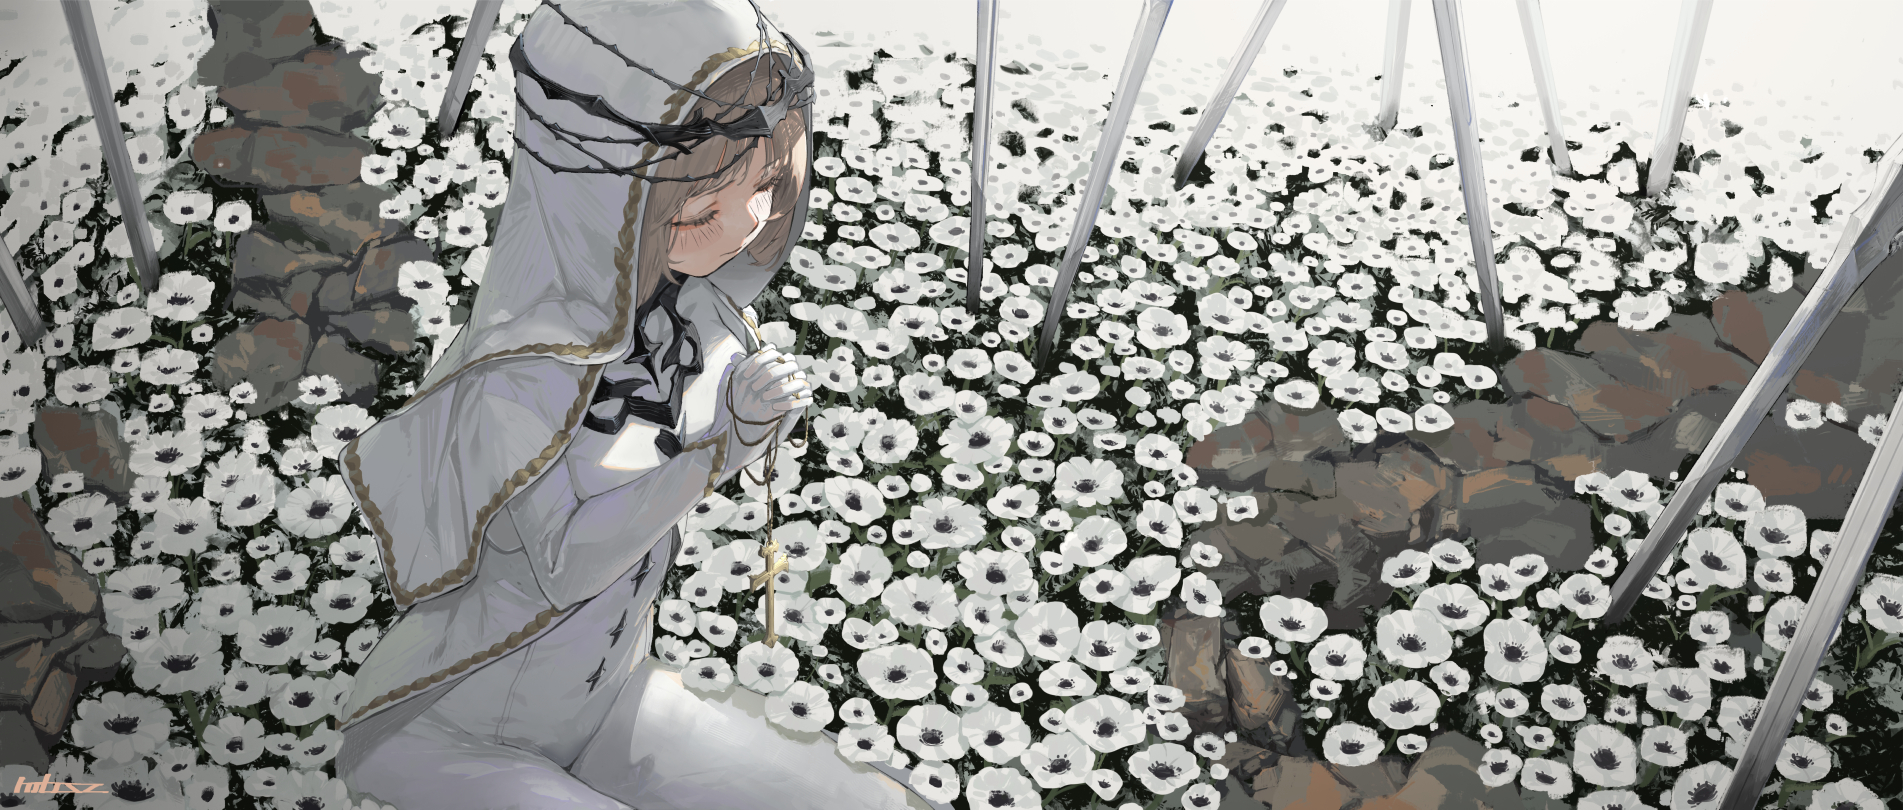 Anime Anime Girls Flowers Closed Eyes Nuns Nun Outfit Praying Cross 1903x810